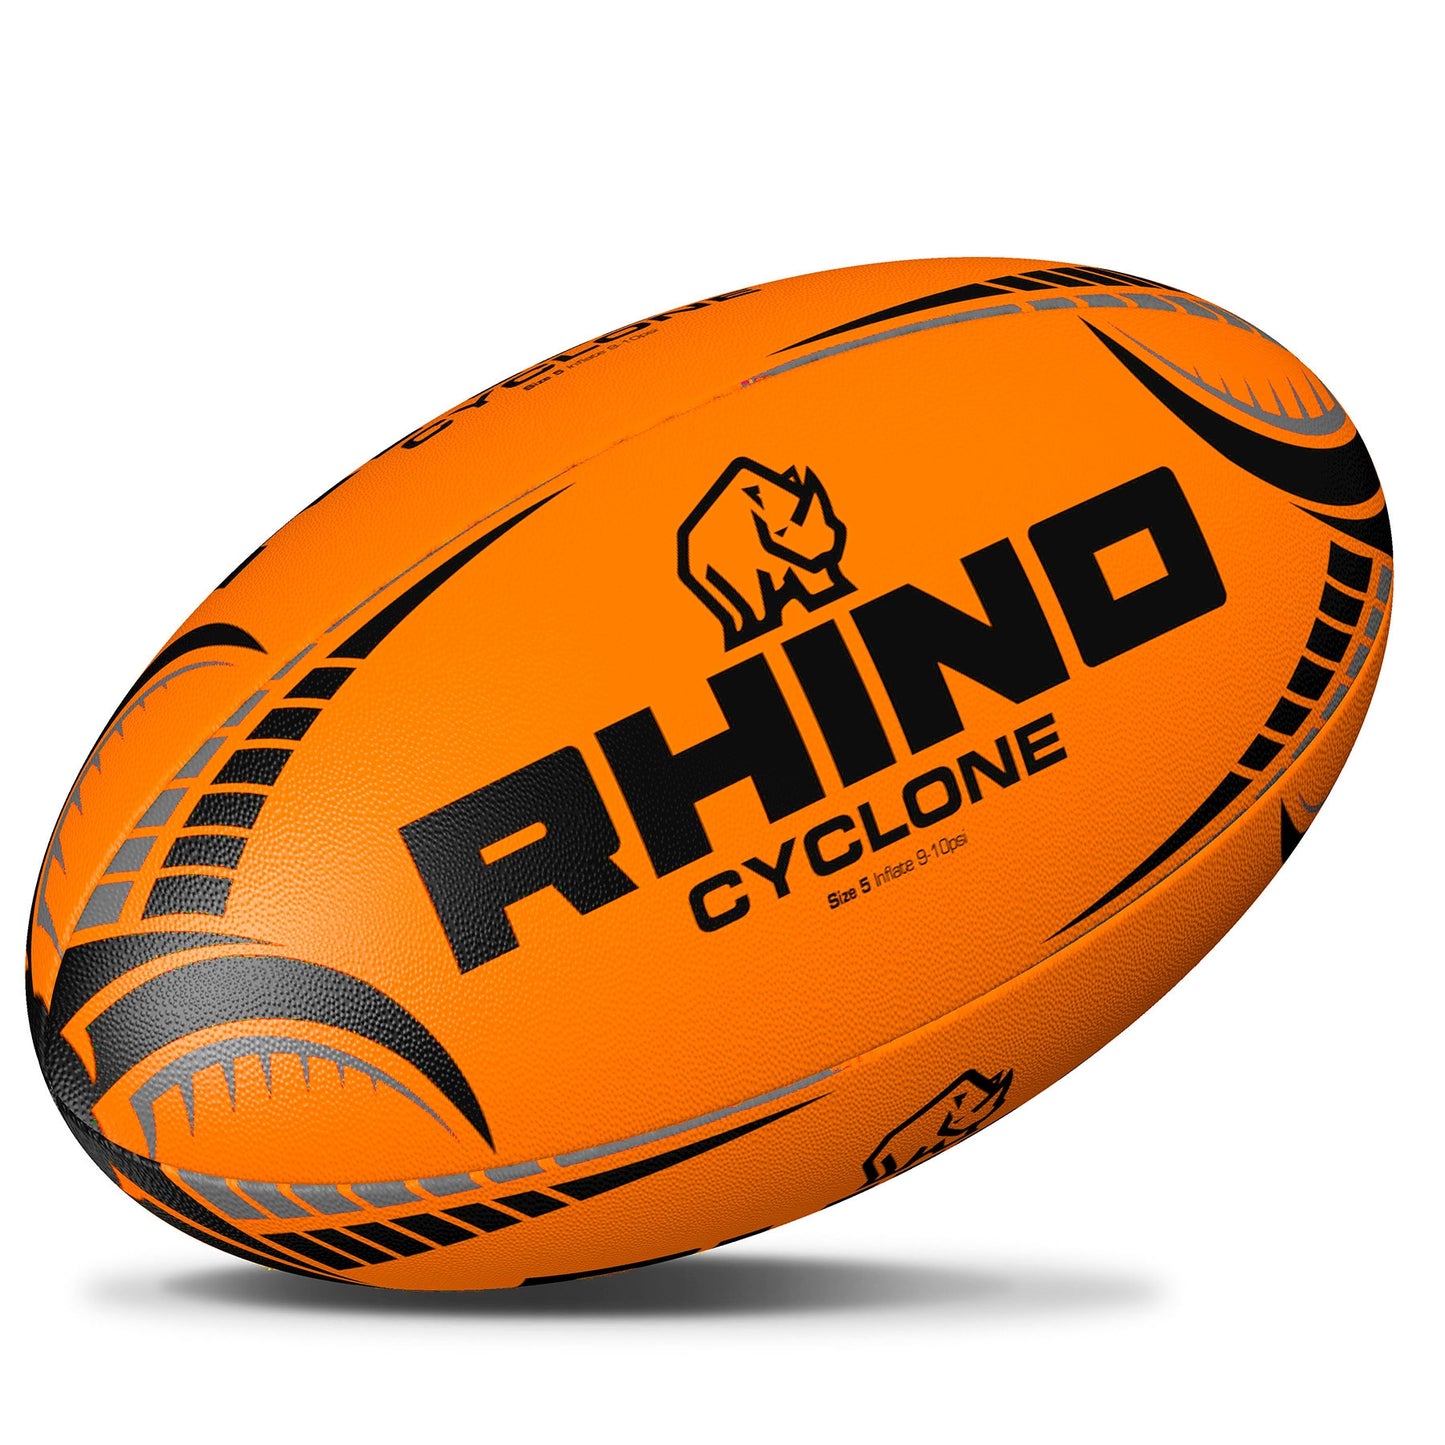 Rhino Cyclone Rugby Ball (Multiple Sizes)